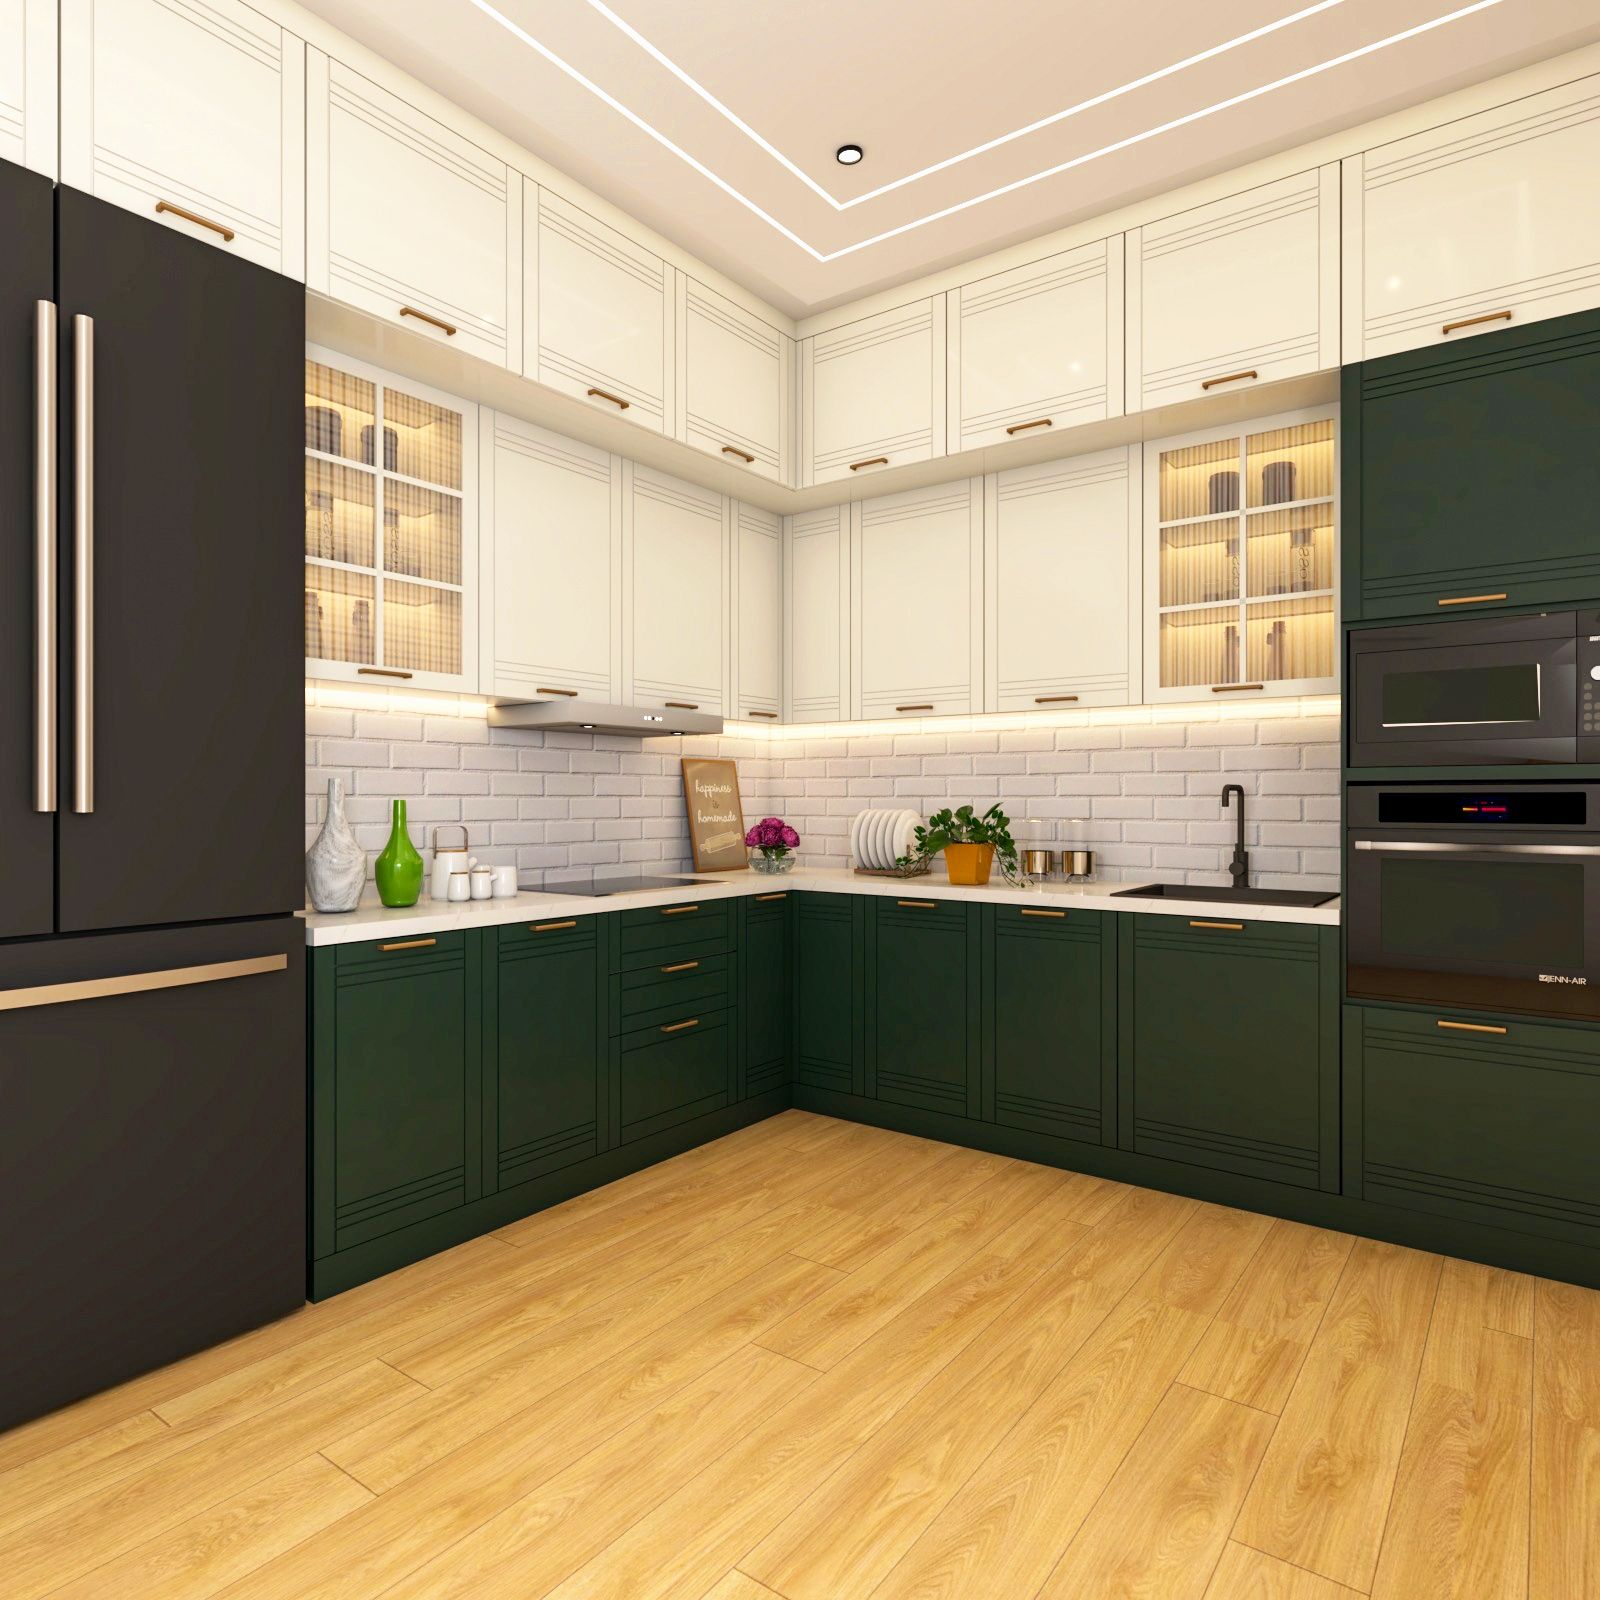 Contemporary Modular L-Shaped Kitchen Design With Dark Green Verde Alpino And White Cabinets